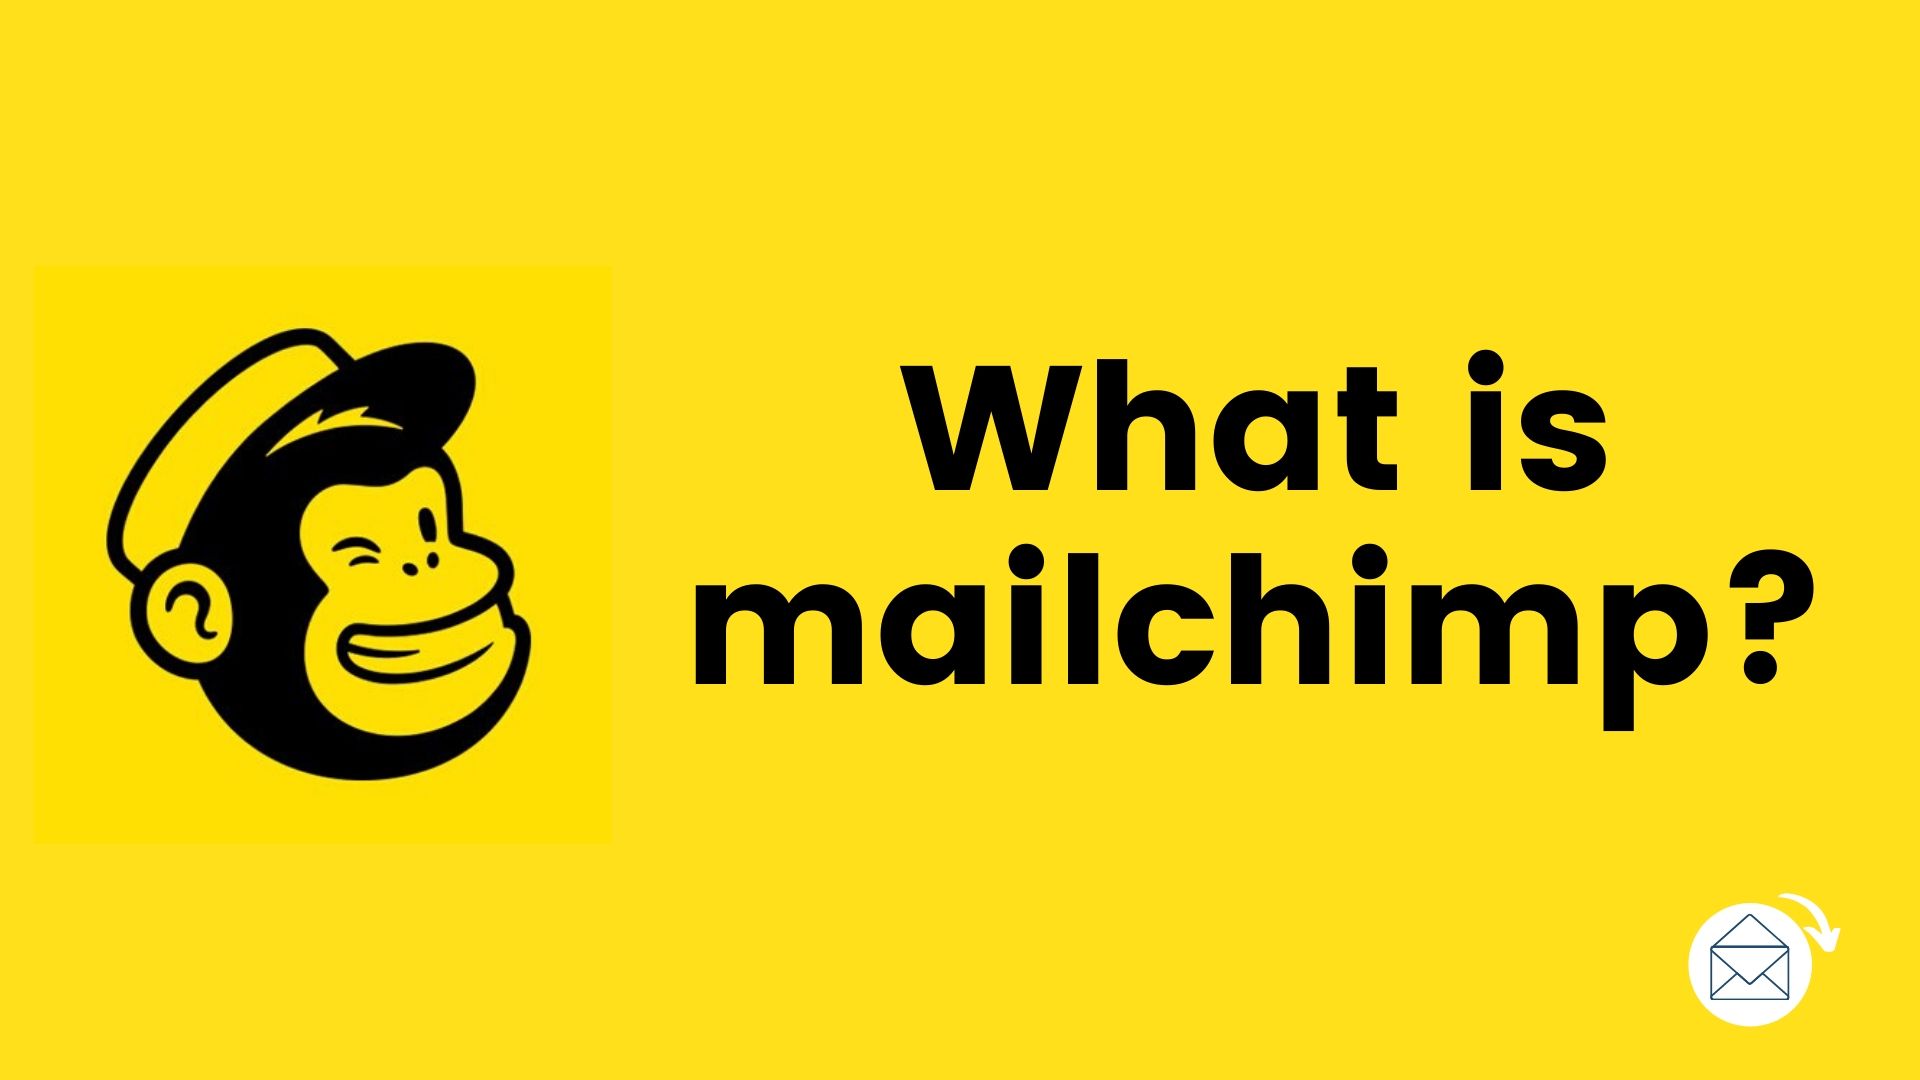 Mailchimp: Marketing, Automation & Email Platform